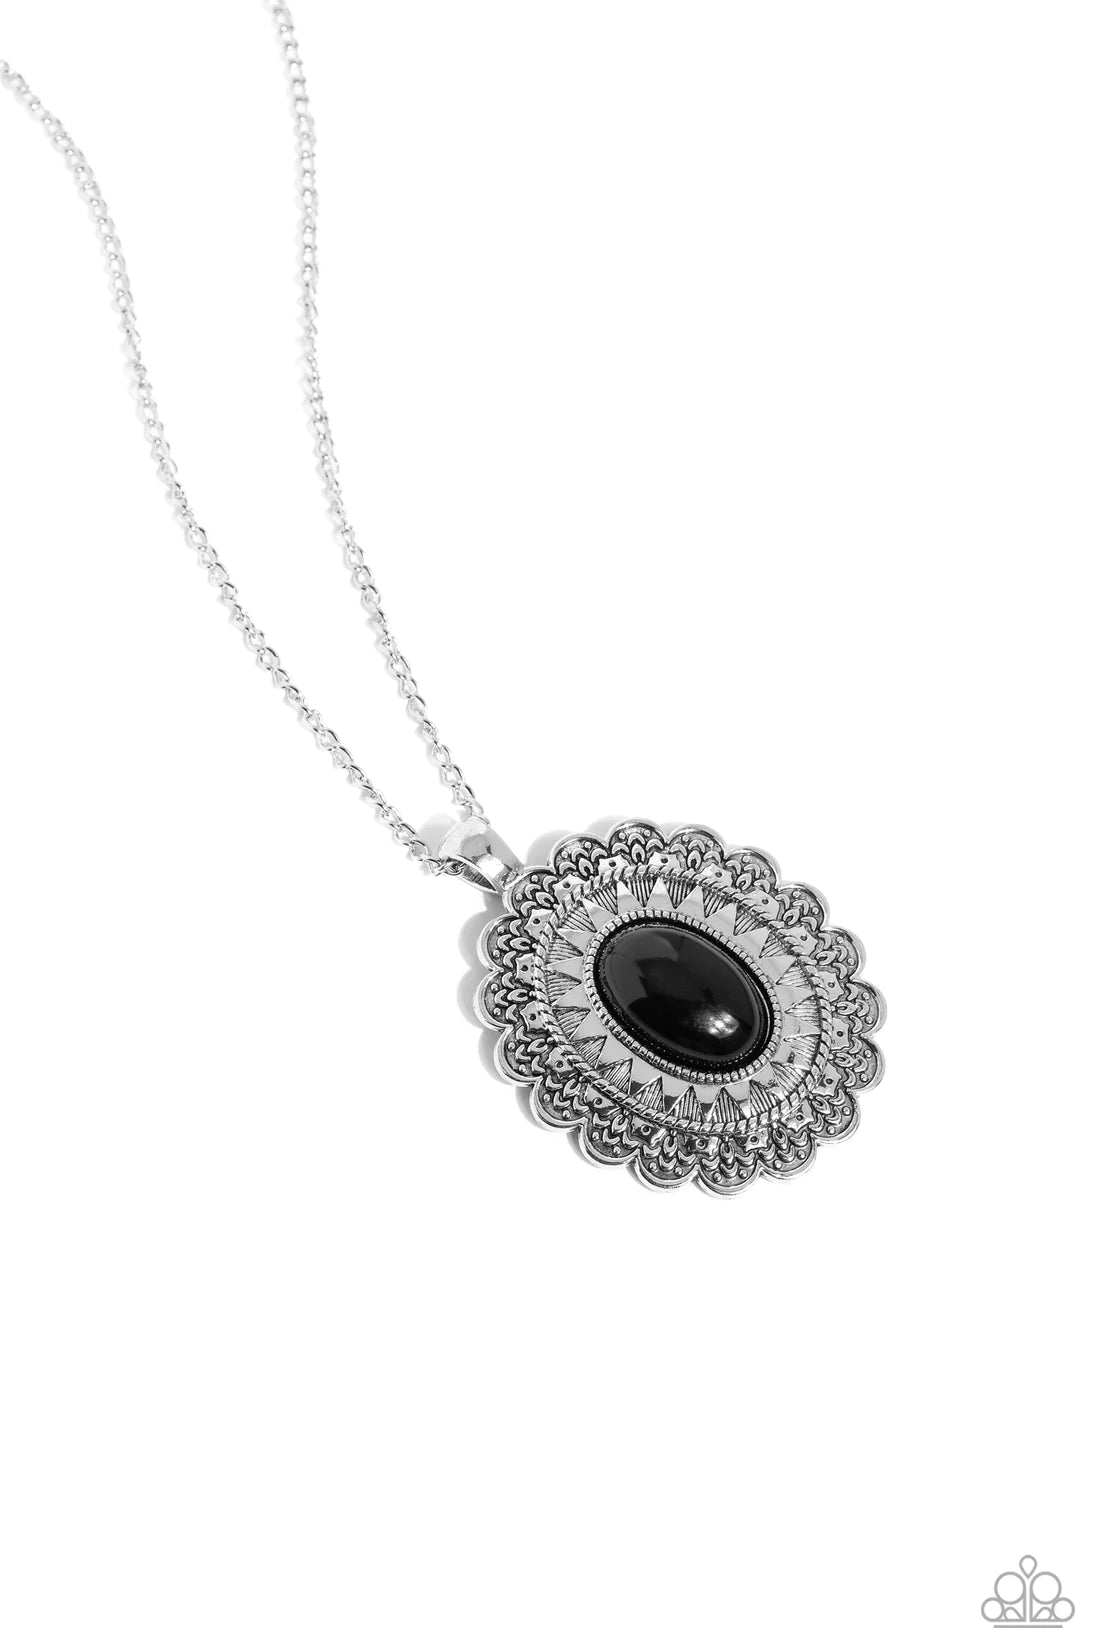 Paparazzi Necklaces - Mesa Medallion - Black